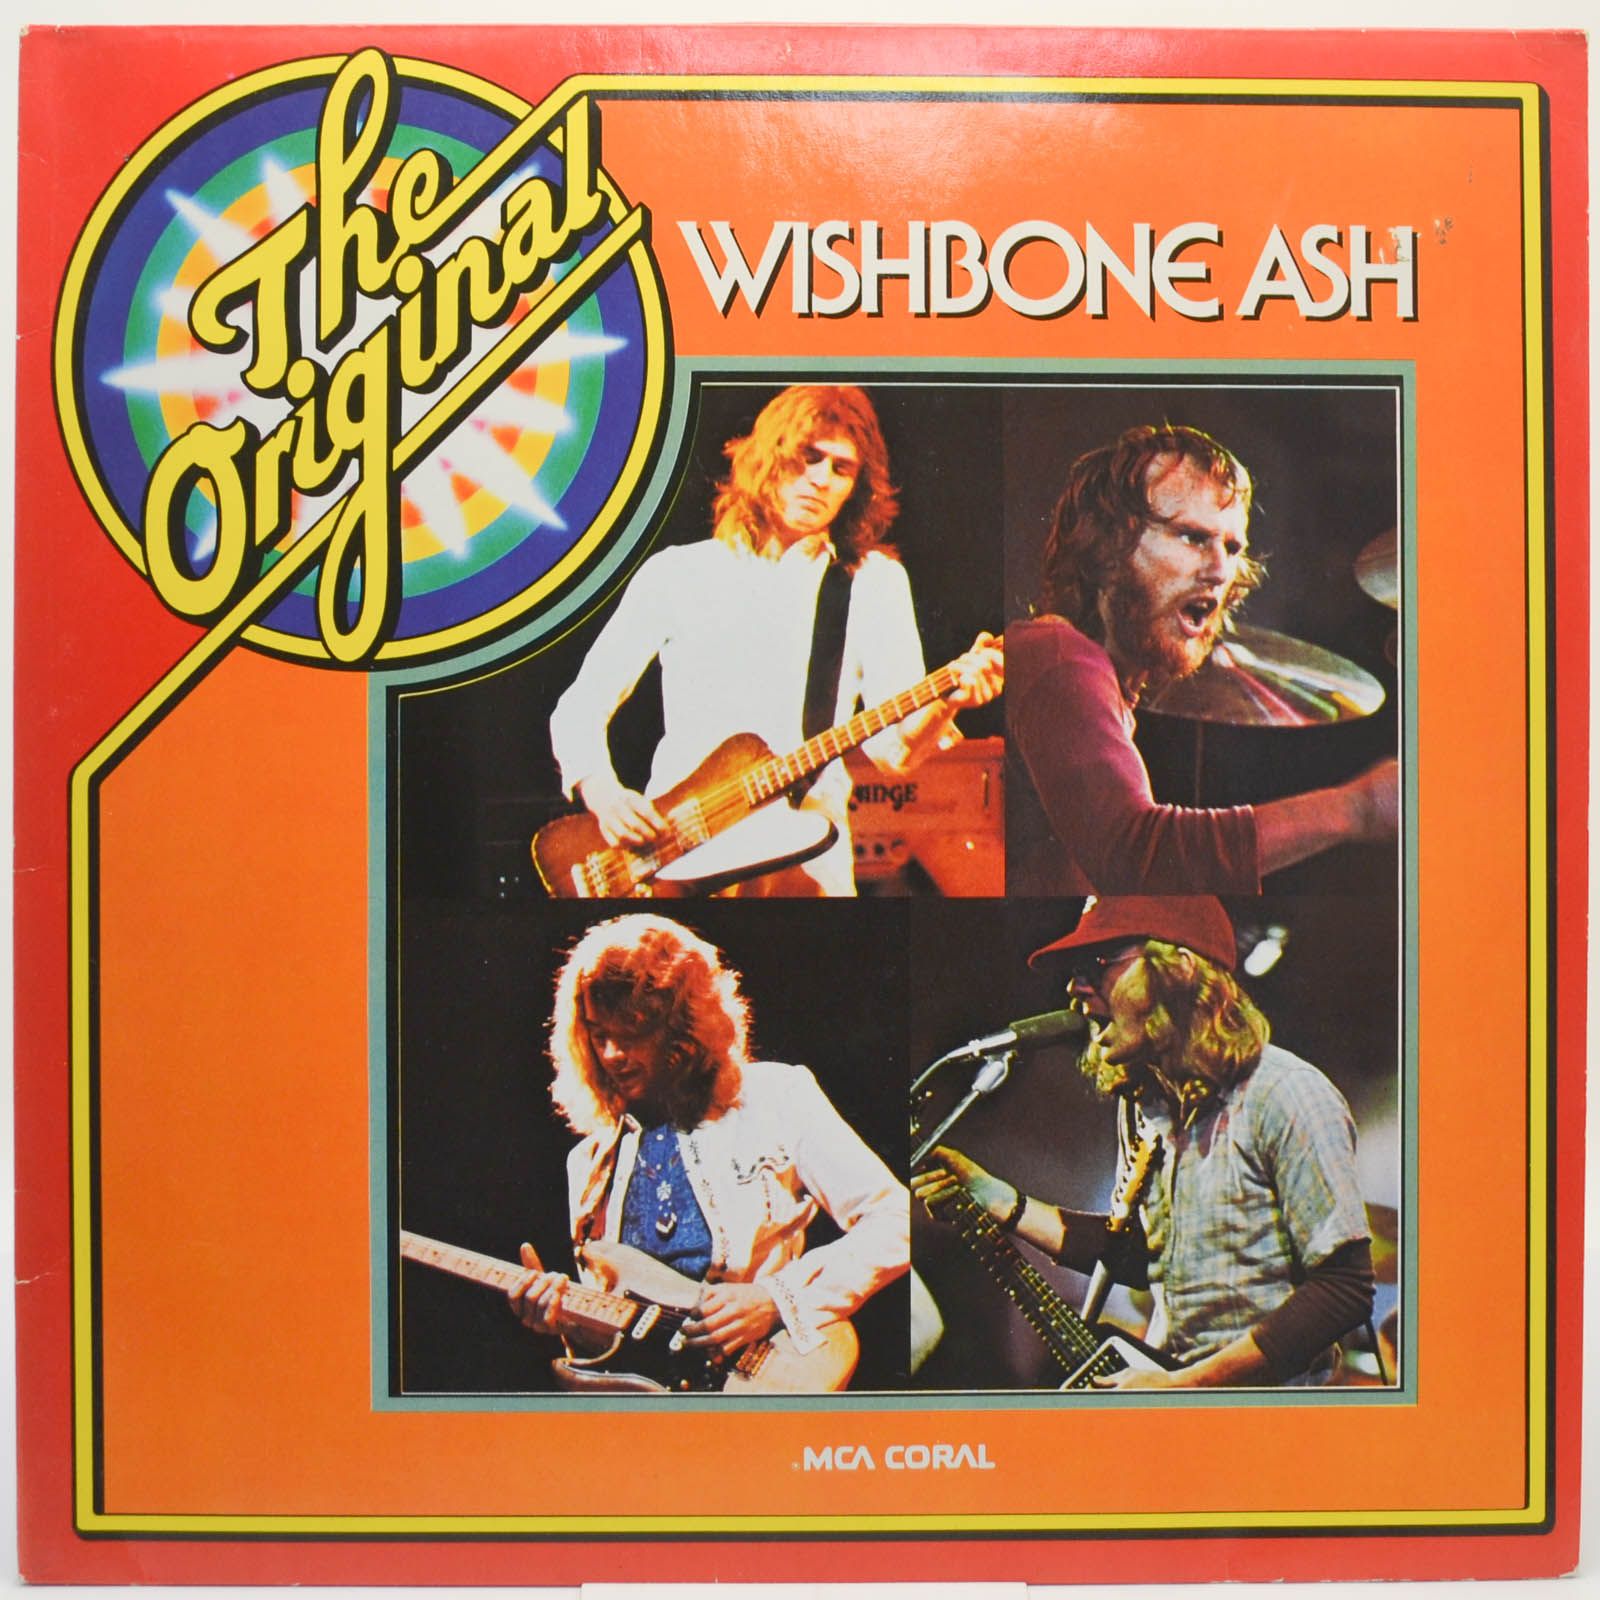 Wishbone Ash — The Original Wishbone Ash, 1977